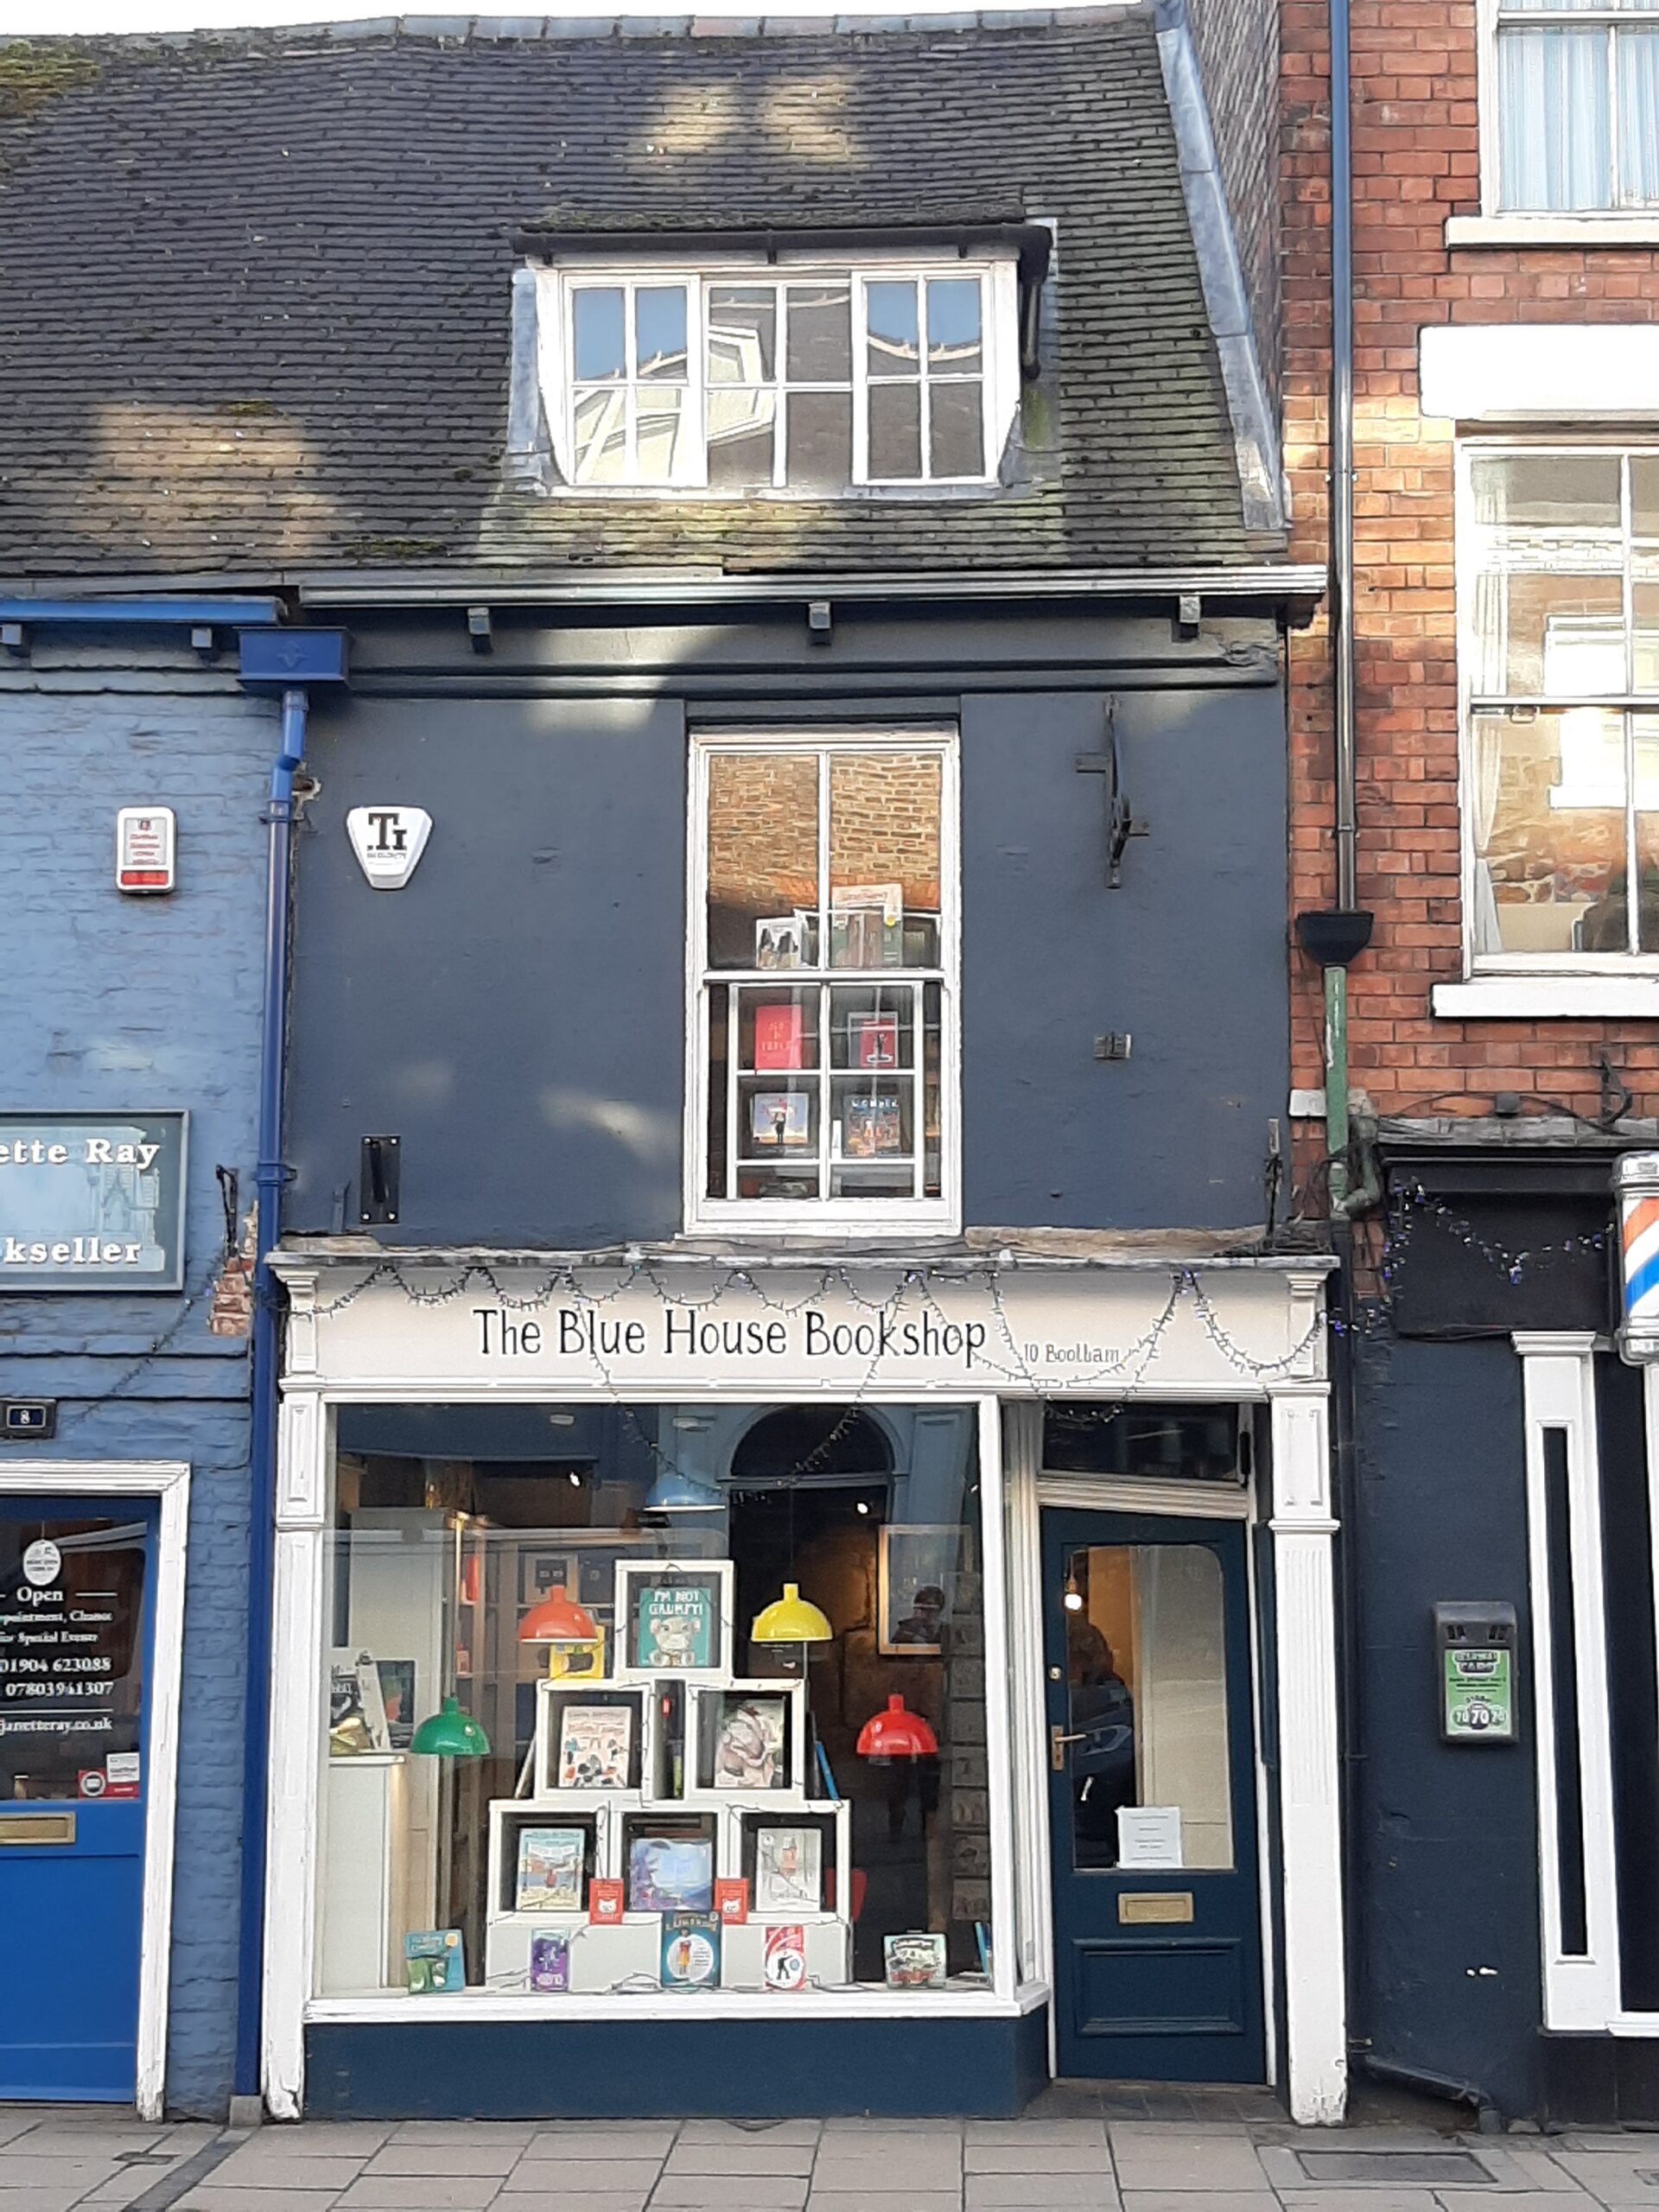 The Blue House Bookshop exterior